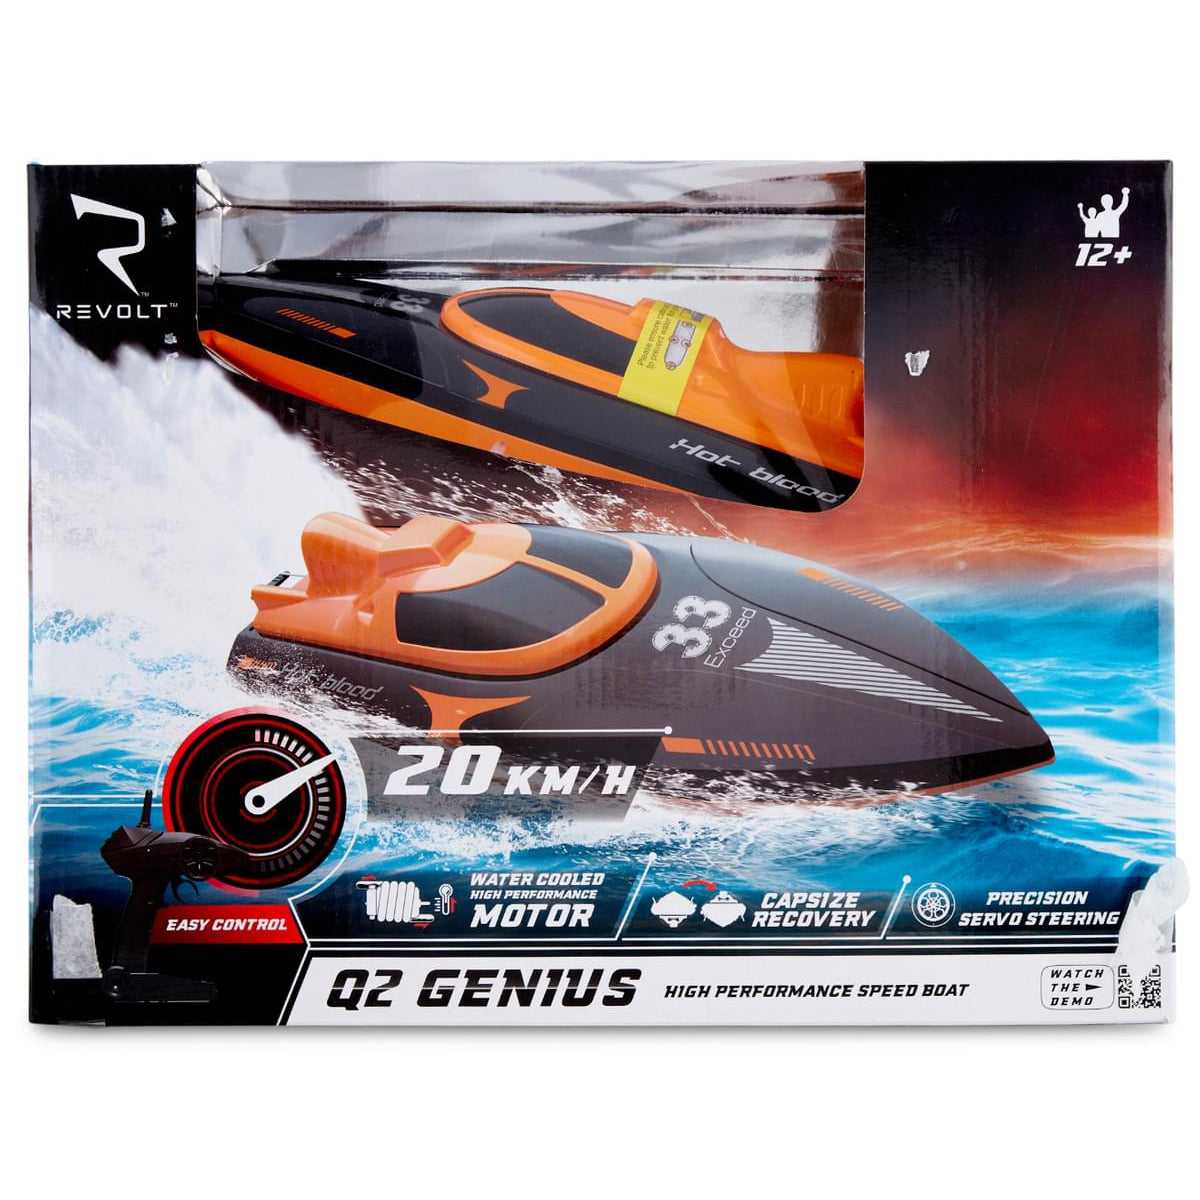 Q2 Genius Boat - Remote Control-Yarrawonga Fun and Games